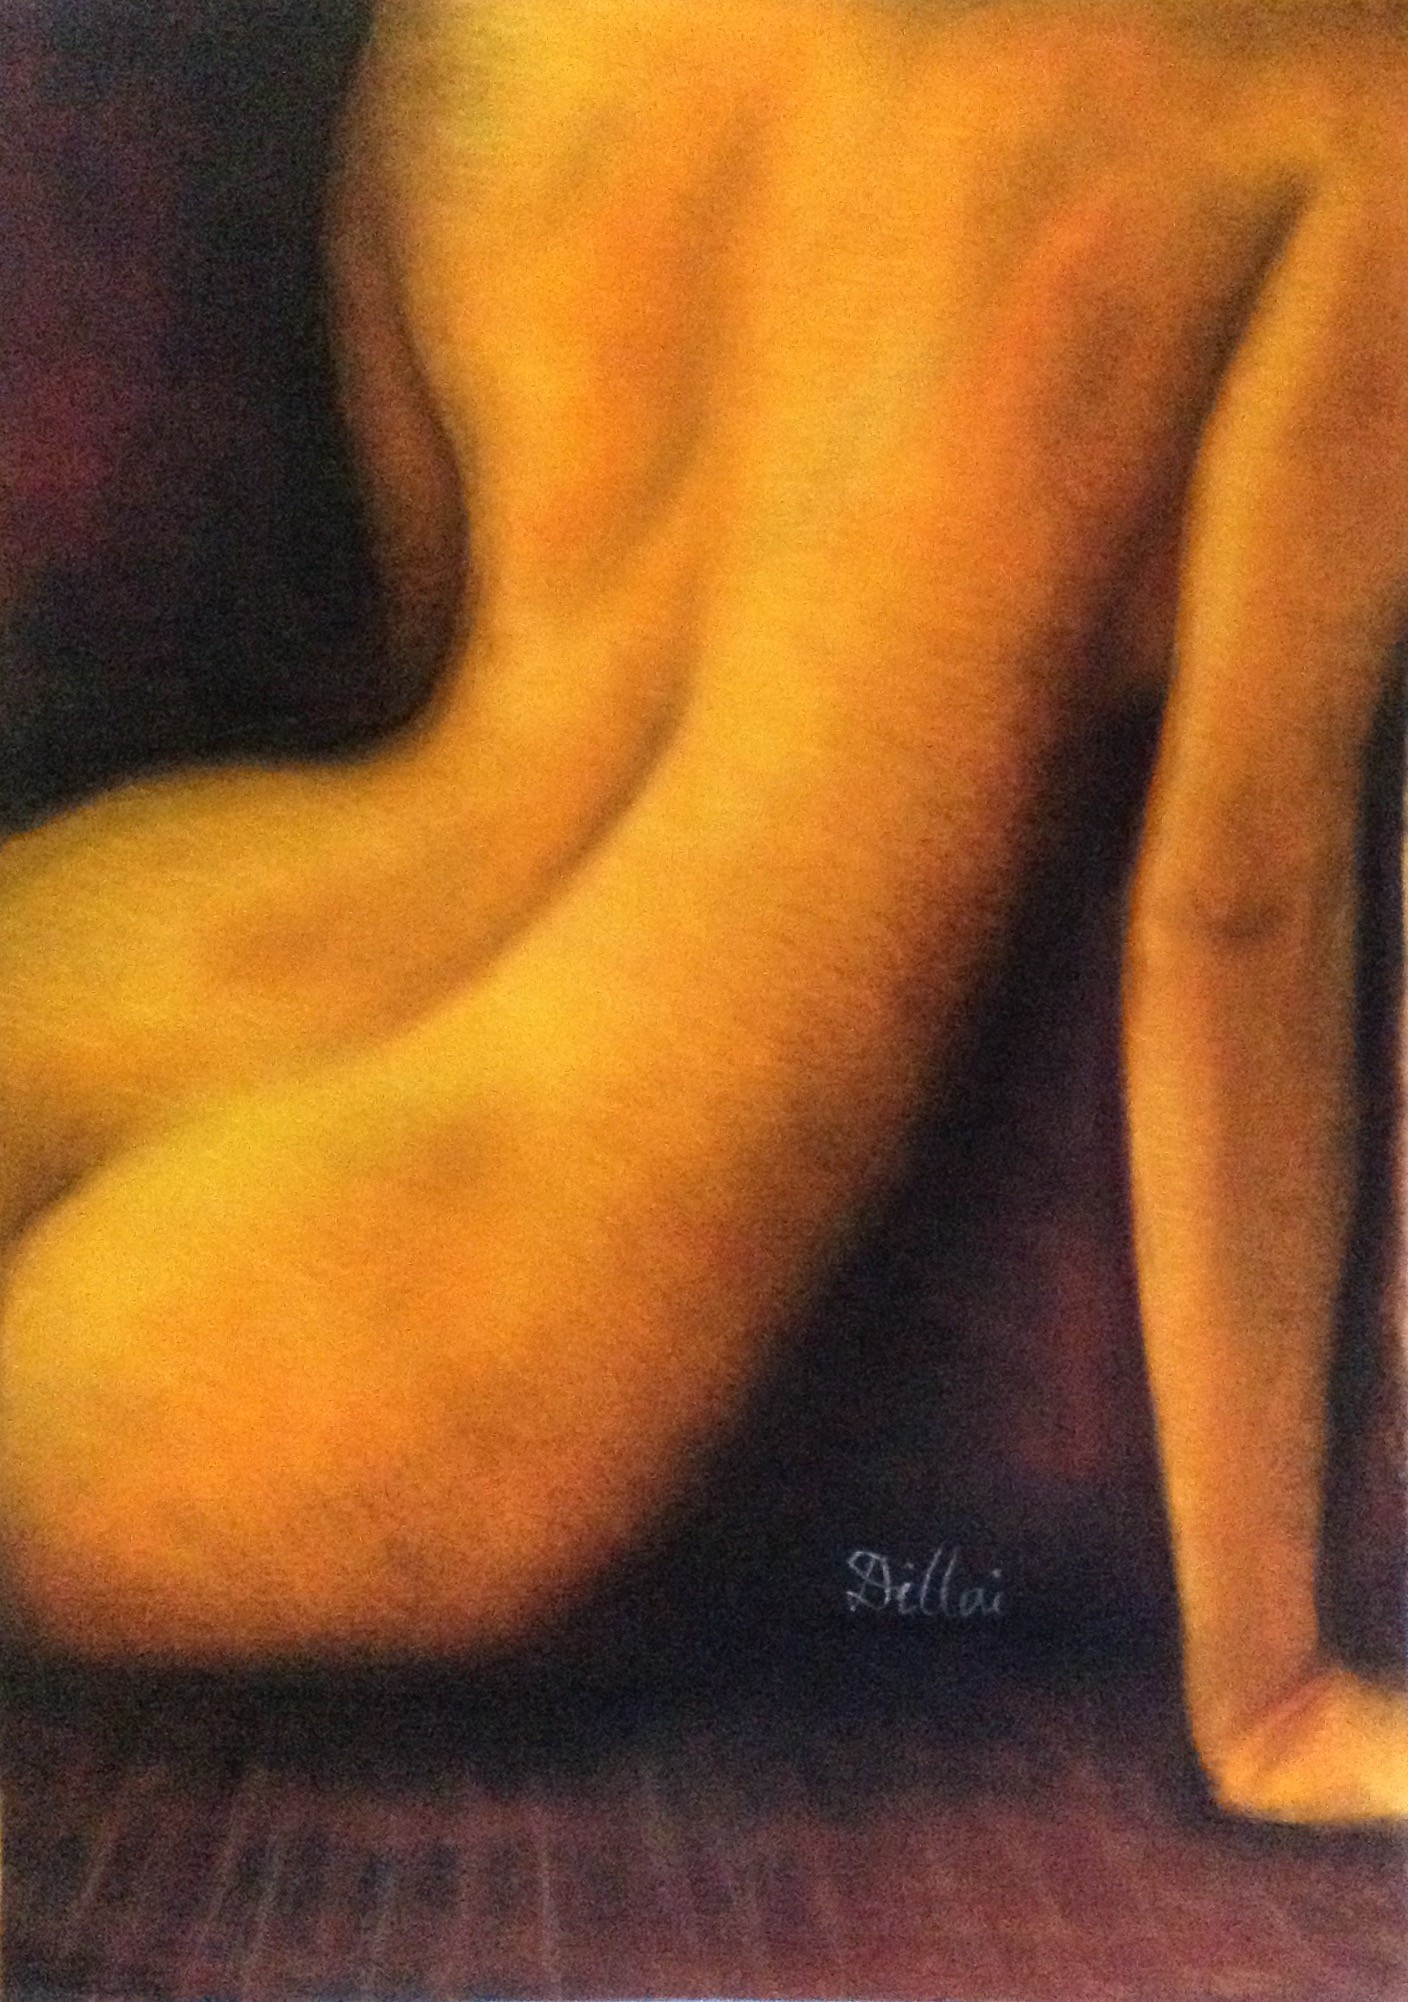 Nude 1 by Dillai Joseph